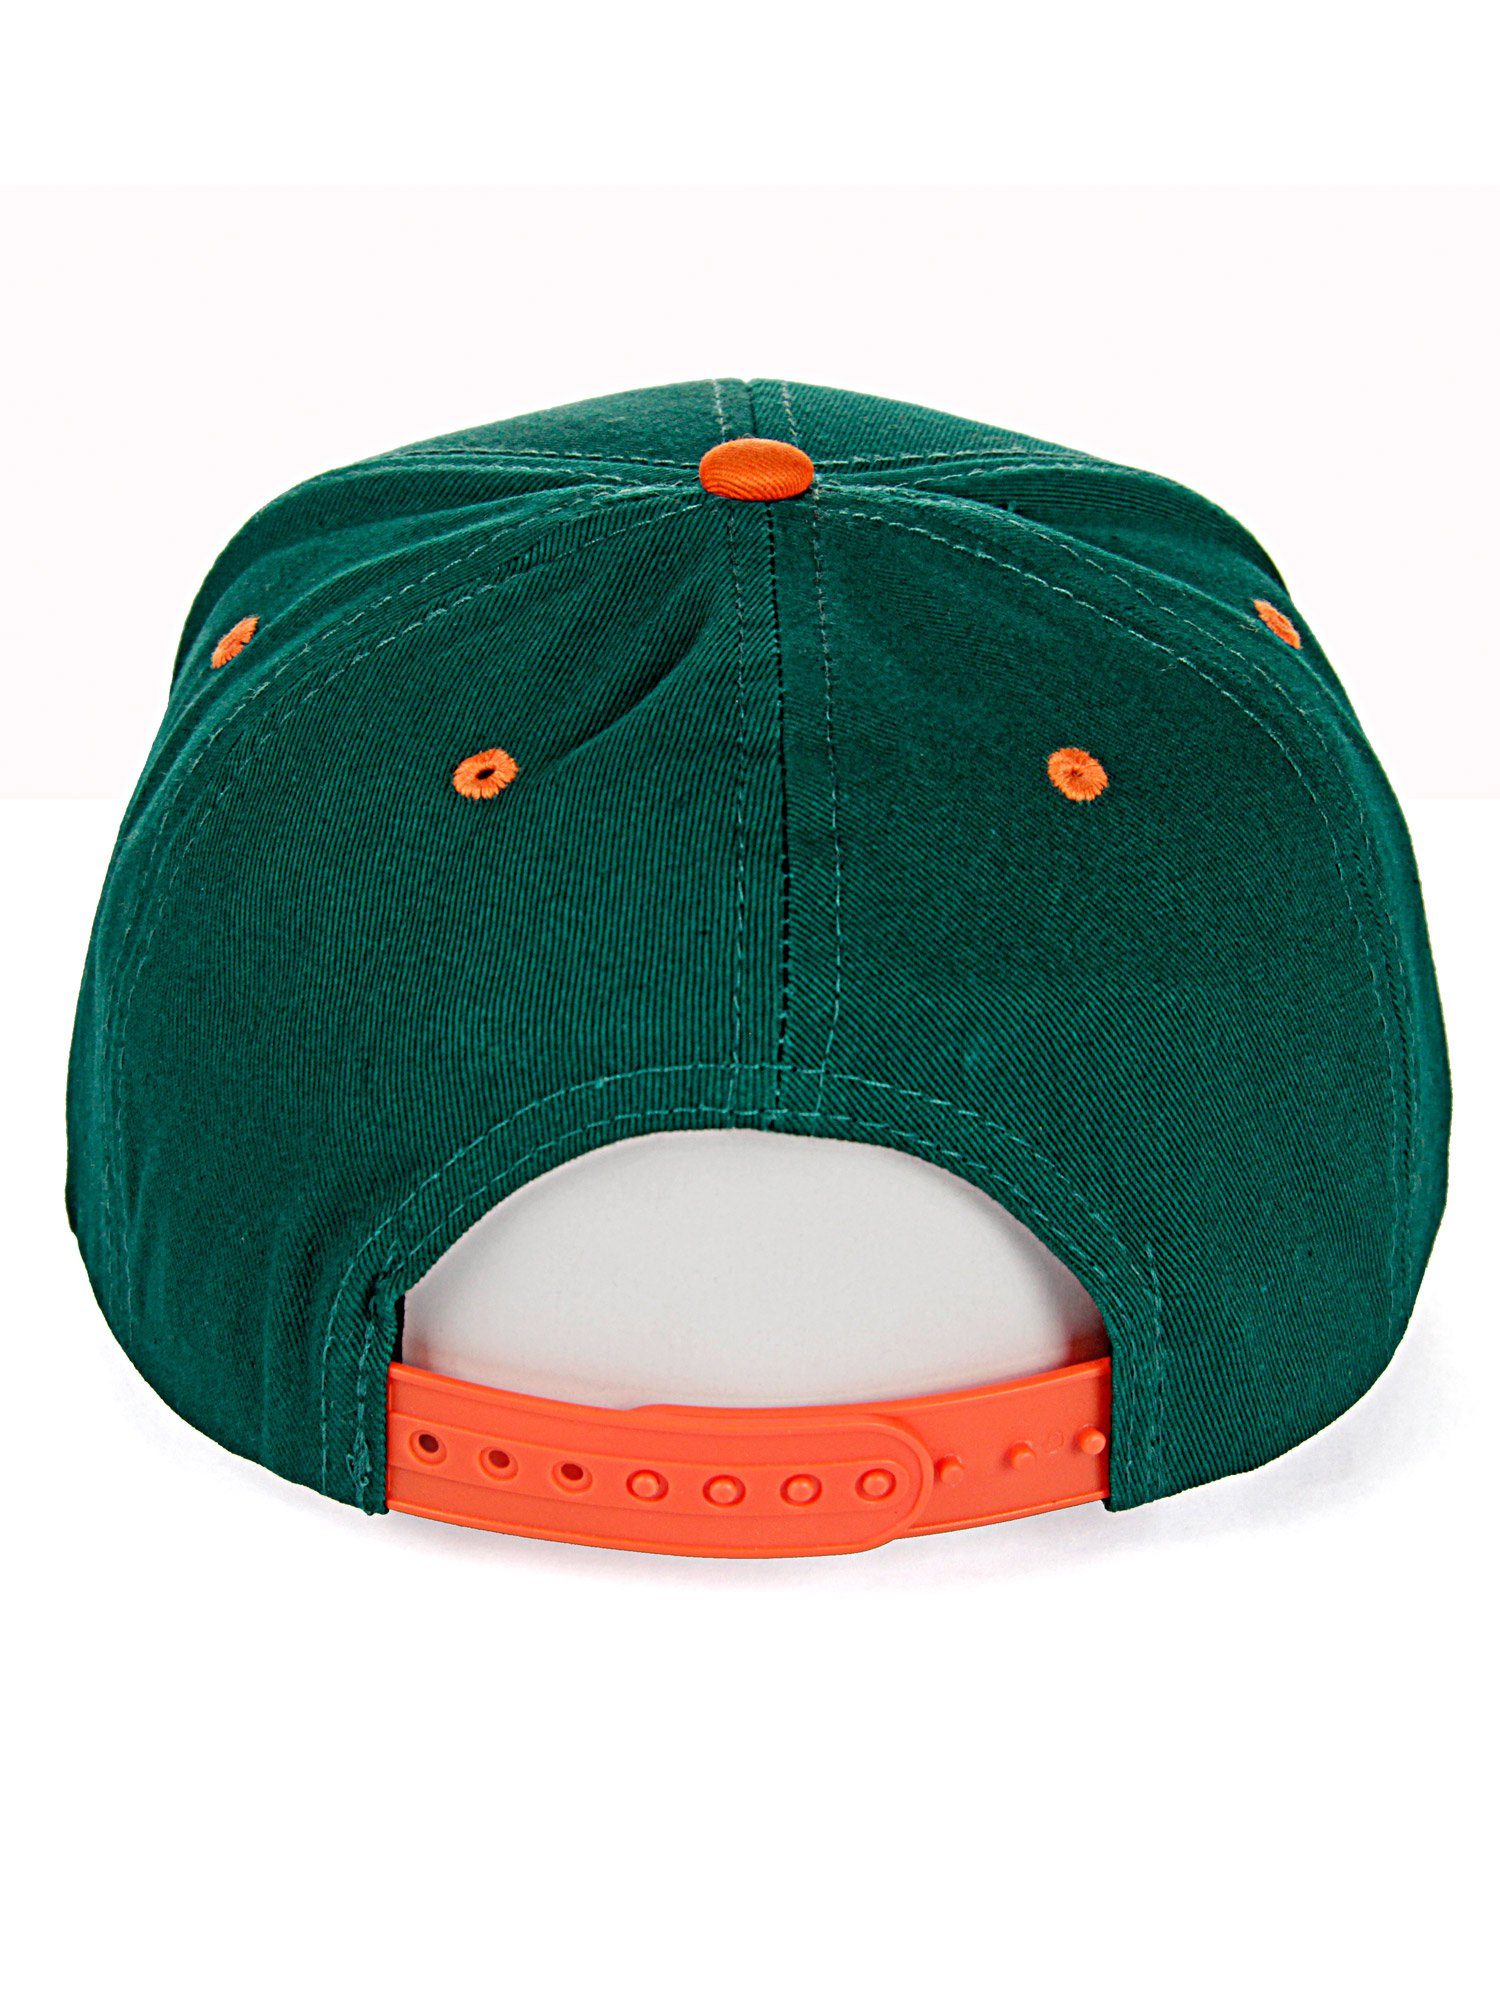 kontrastfarbigem grün-orange Cap Sittingbourne Baseball RedBridge mit Schirm